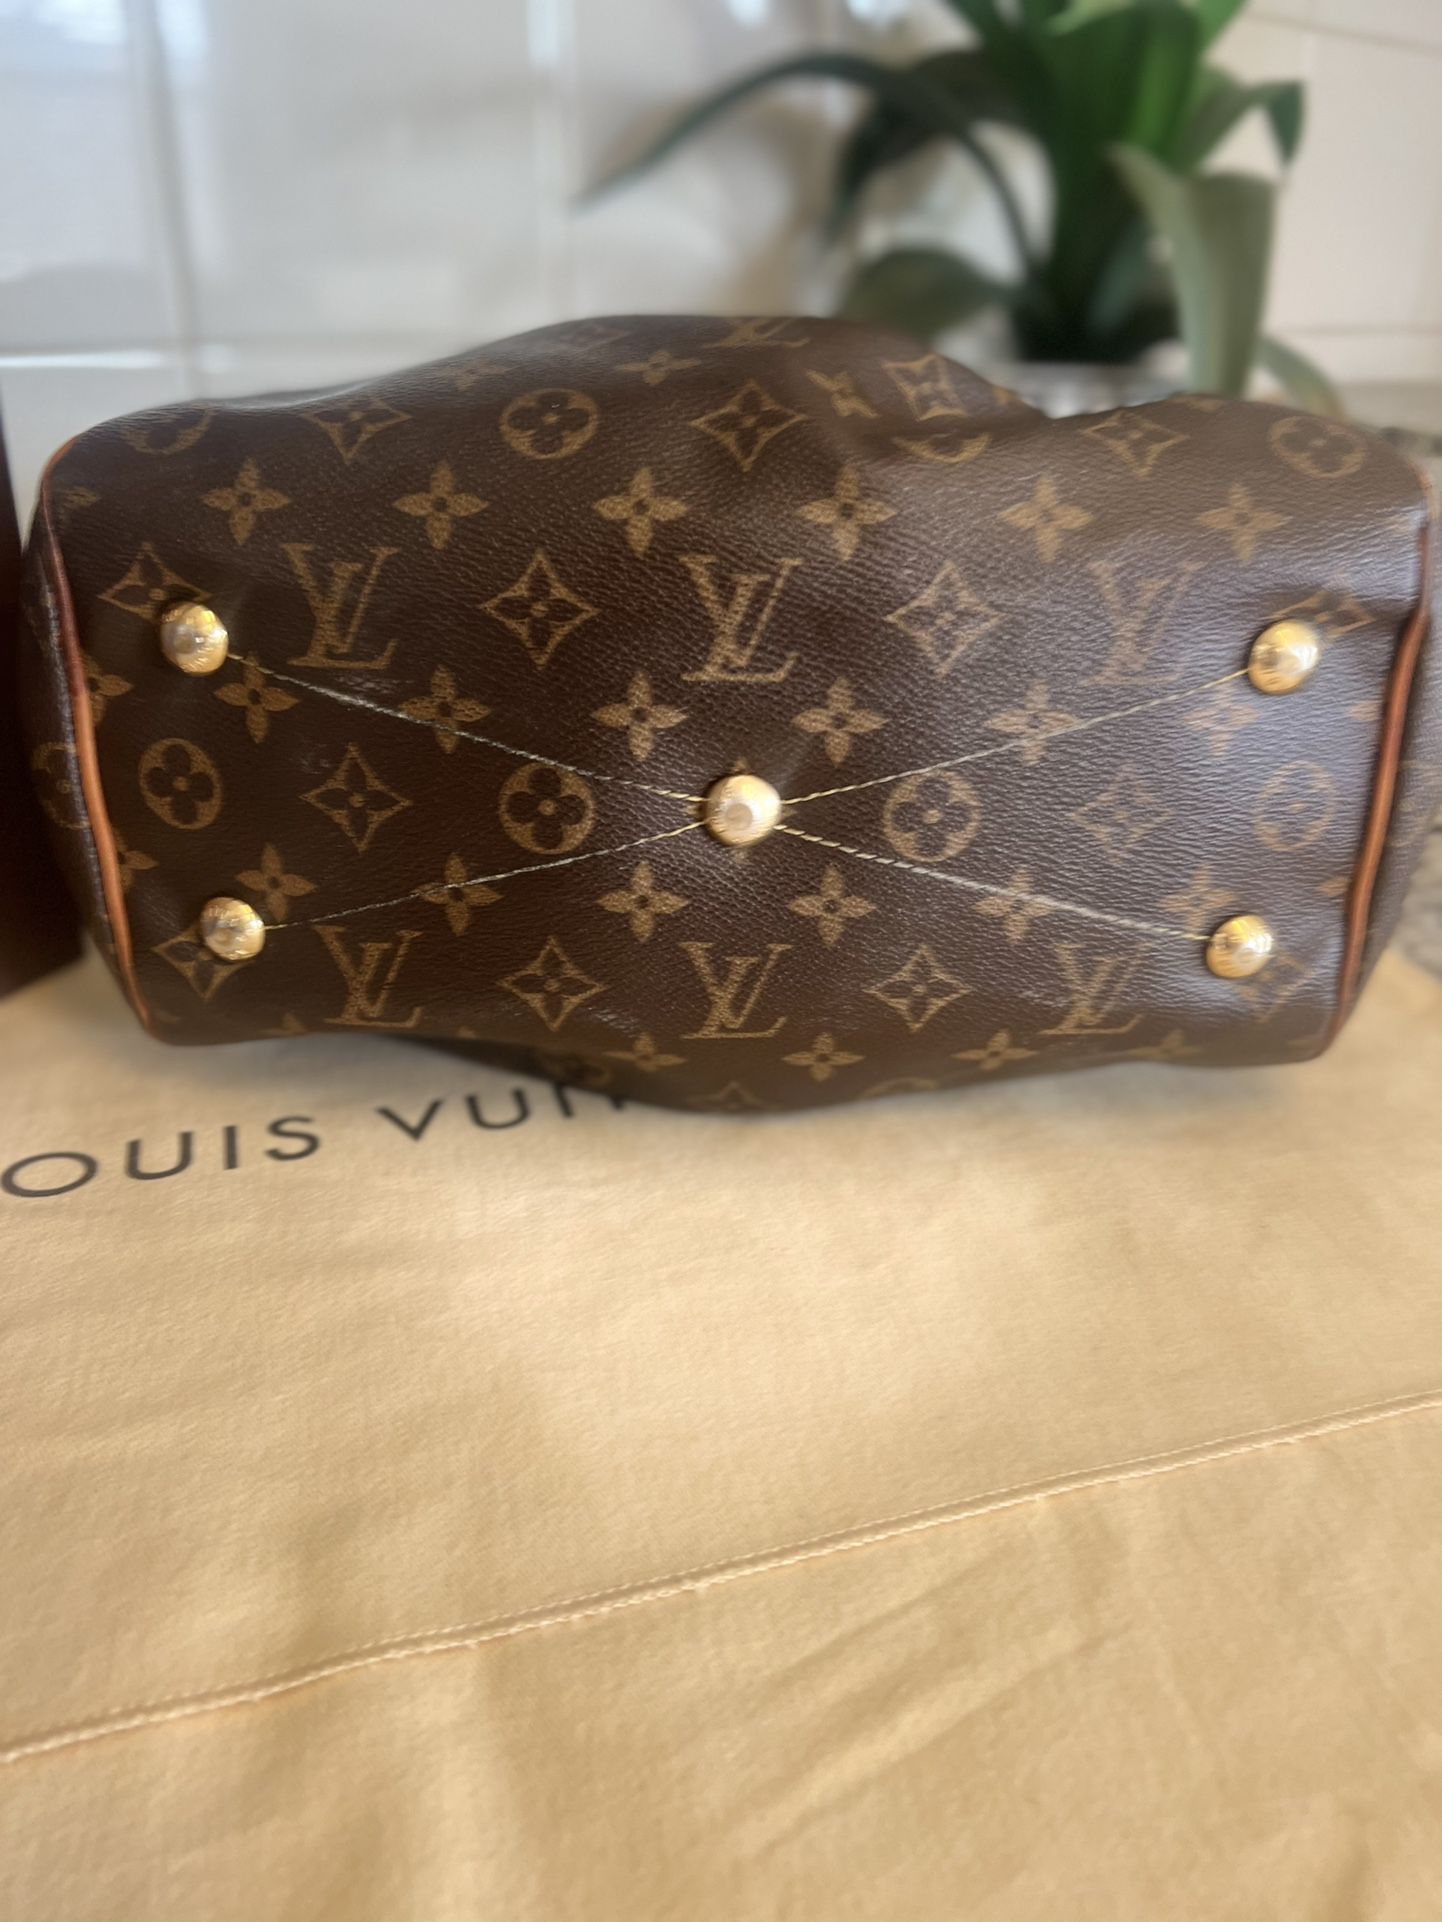 Louis Vuitton Sistina Handbag for Sale in Clovis, CA - OfferUp